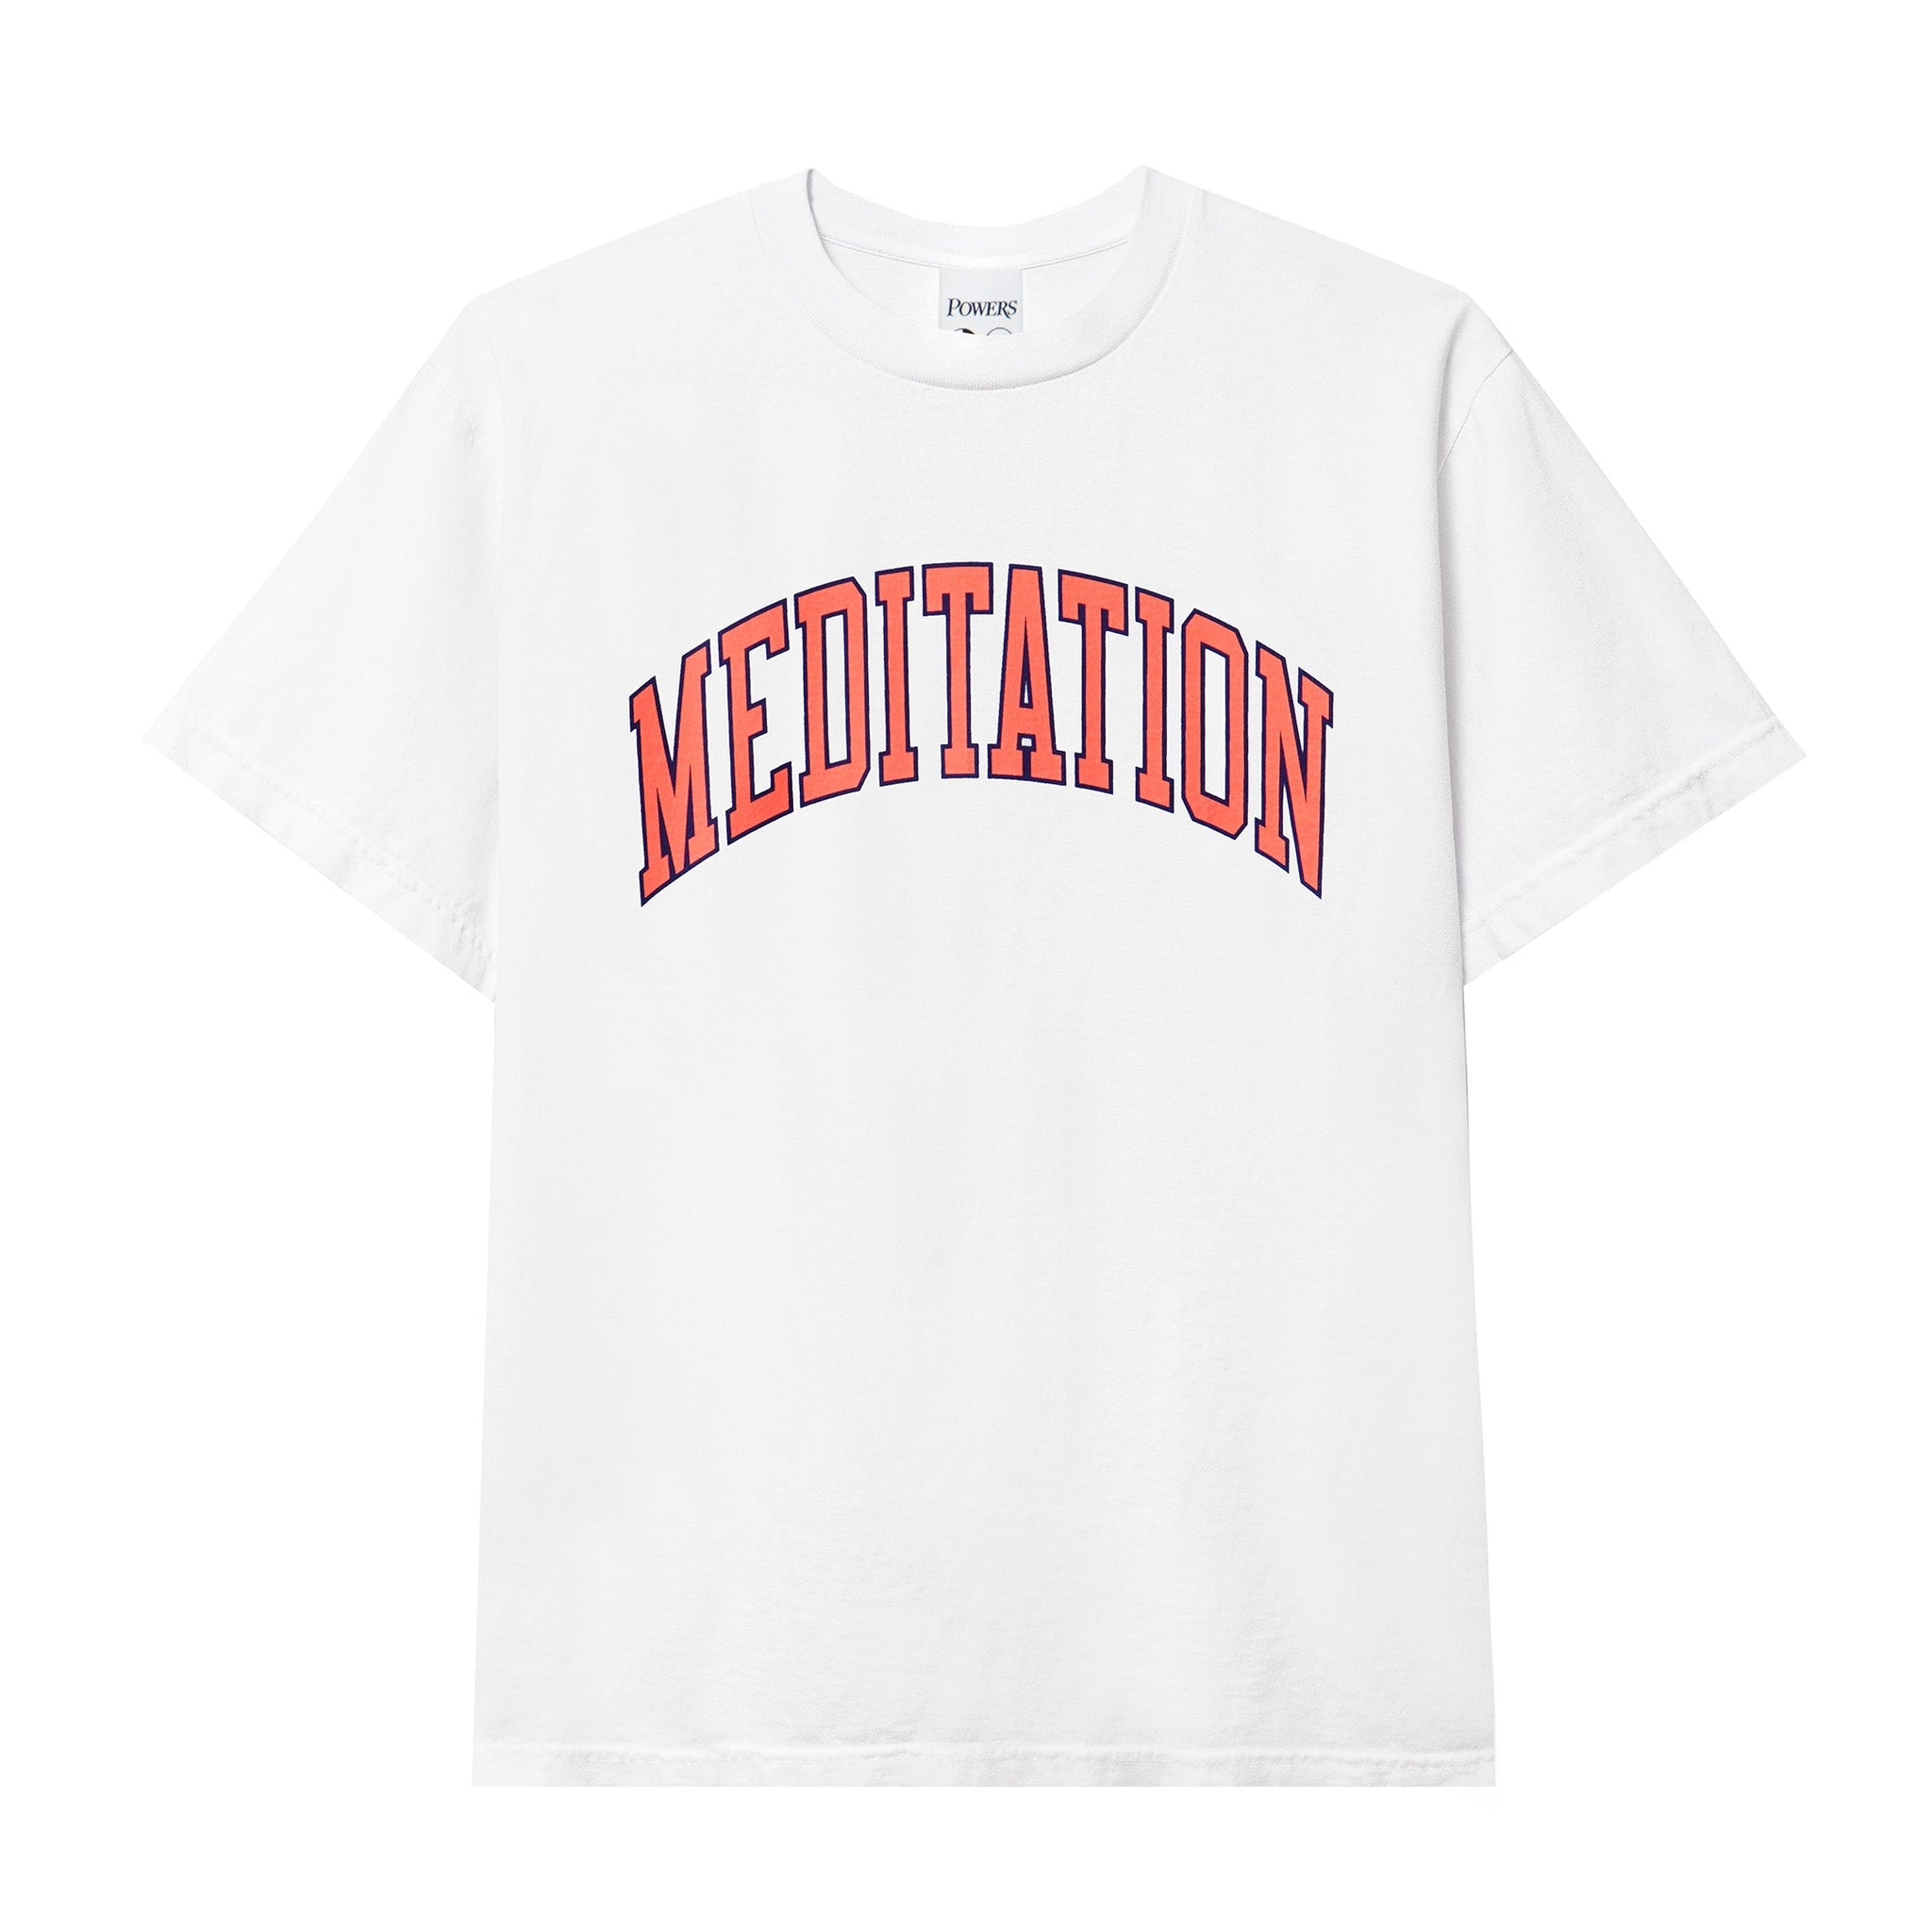 Meditation S/S Tee - White